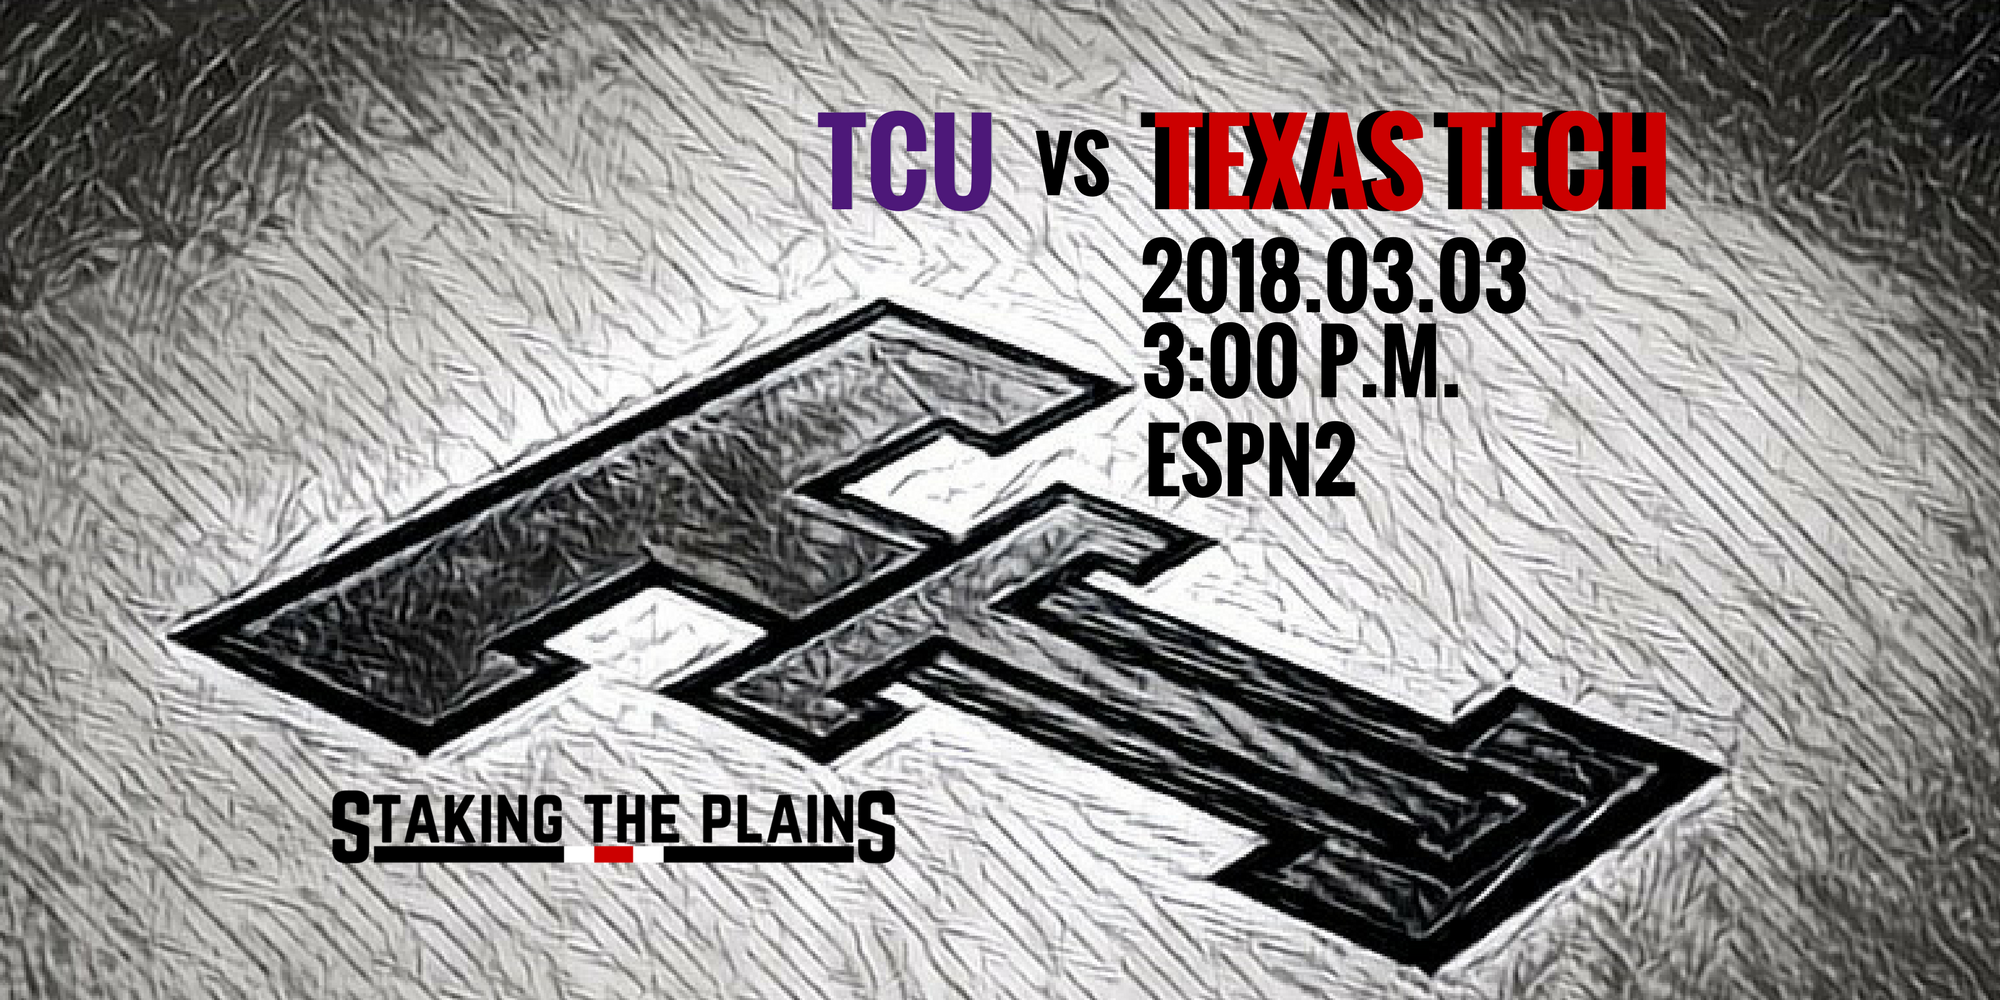 Preview and Game Thread: TCU vs. Texas Tech